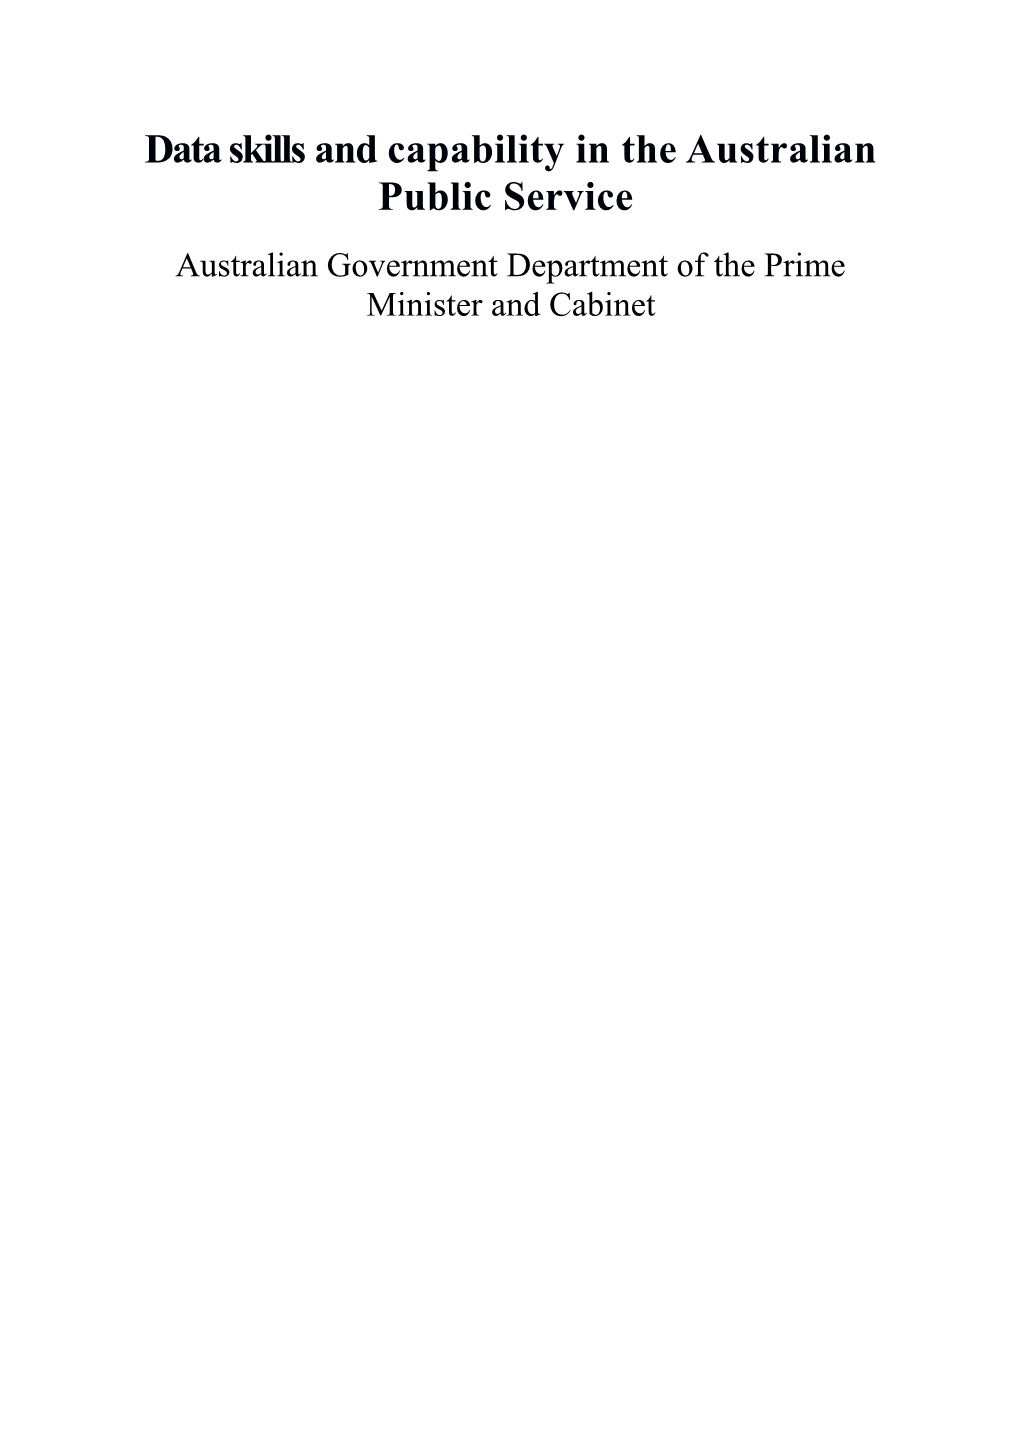 Data Skills and Capability in the Australian Public Service